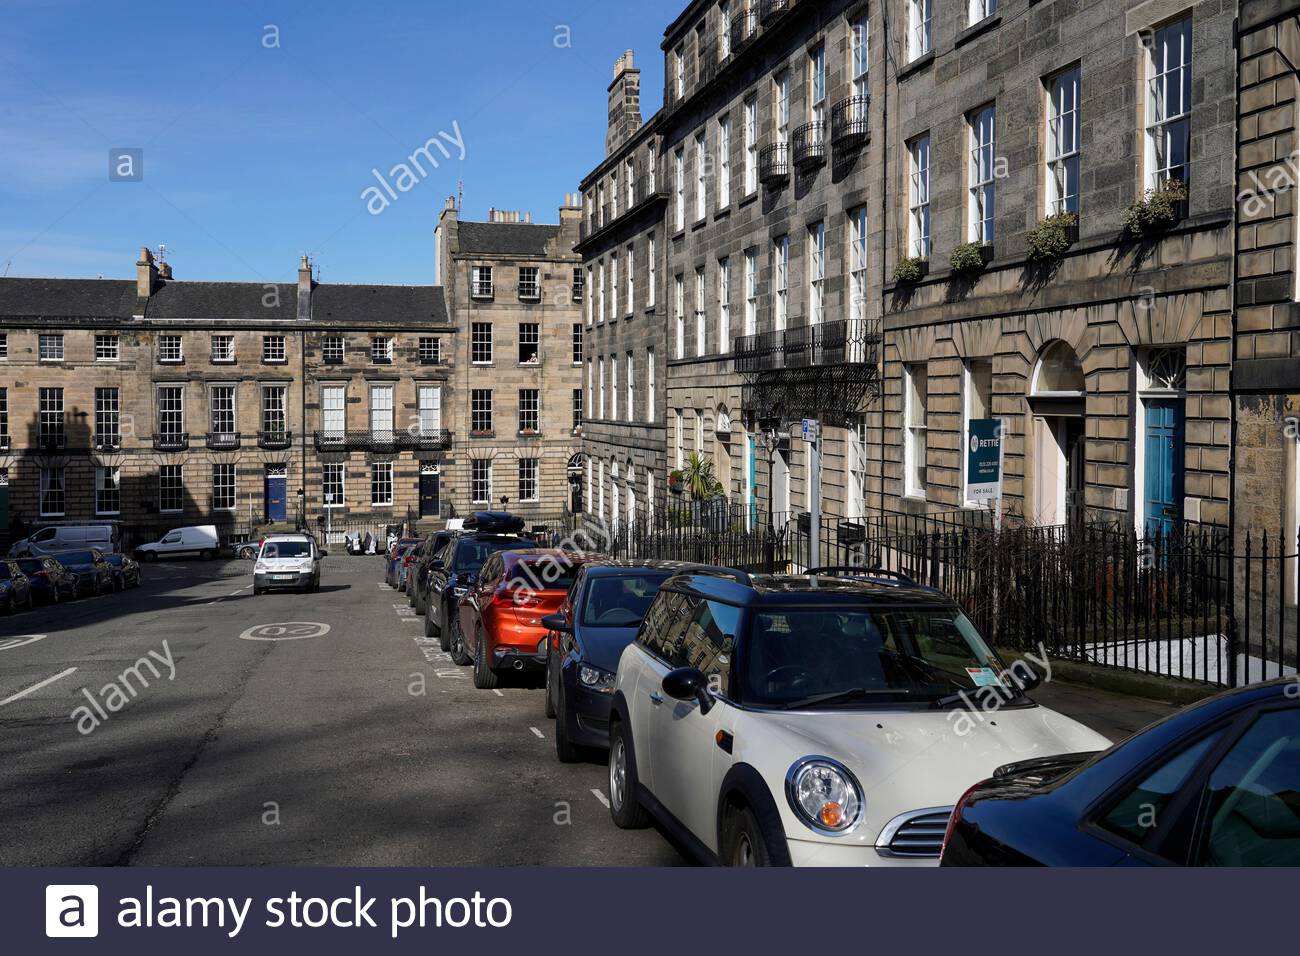 Nelson Street and Northumberland Street, Edinburgh New Town Streets, upmarket housing, Edinburgh, Scotland Stock Photo